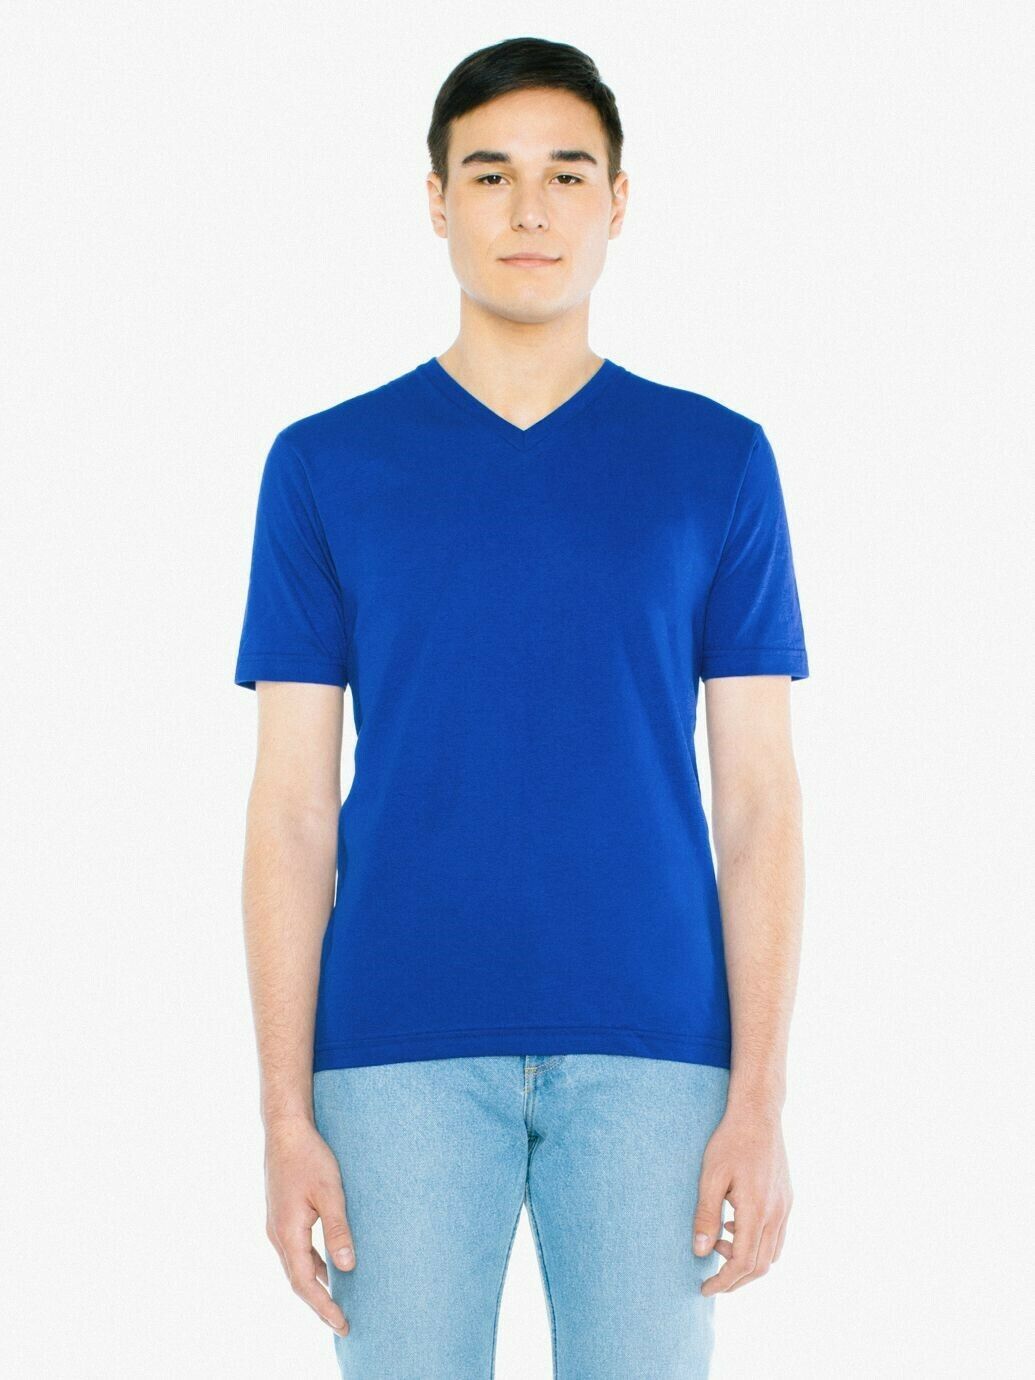 American Apparel Fine Jersey Short Slv V-Neck T-Shirt S Royal Blue NEW 24321W